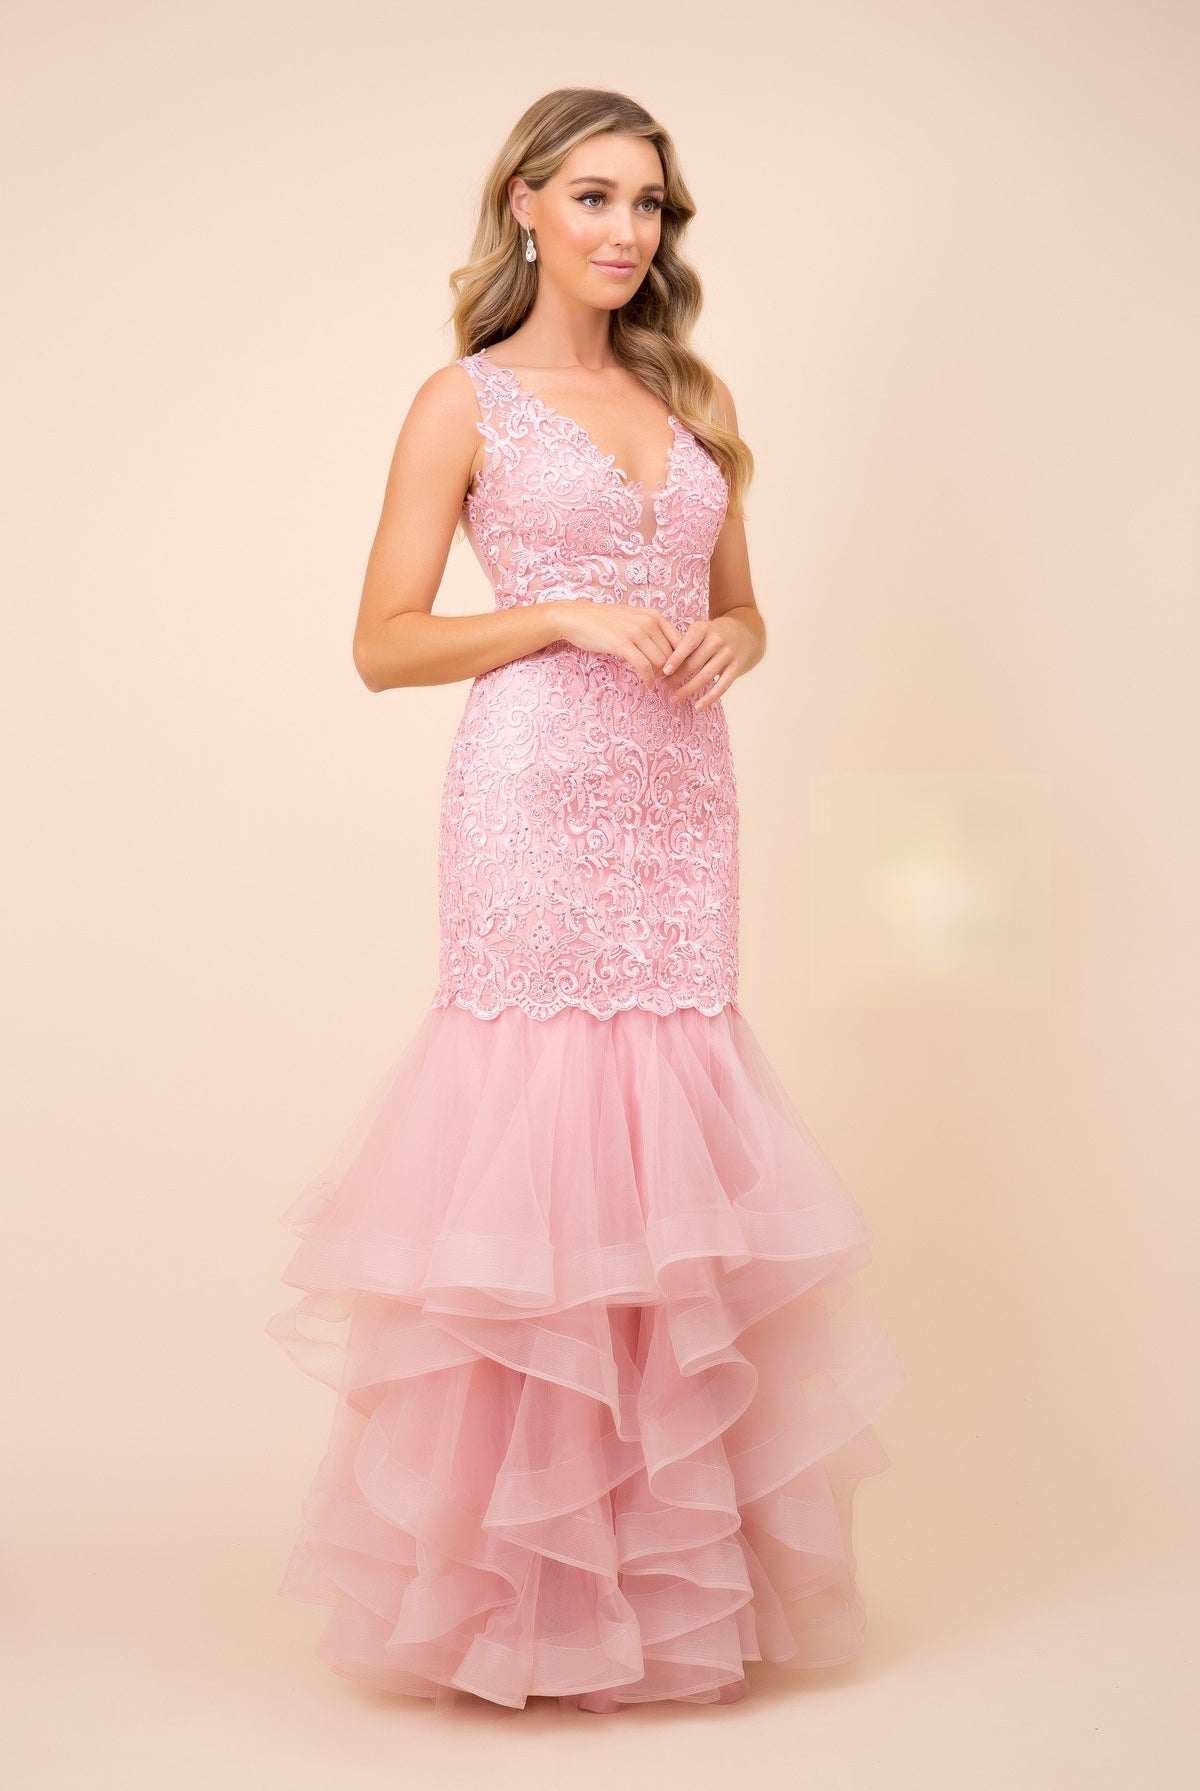 Mermaid Tiered Skirt Straps Sheer Back Long Prom Dress NXA059-Prom Dress-smcfashion.com